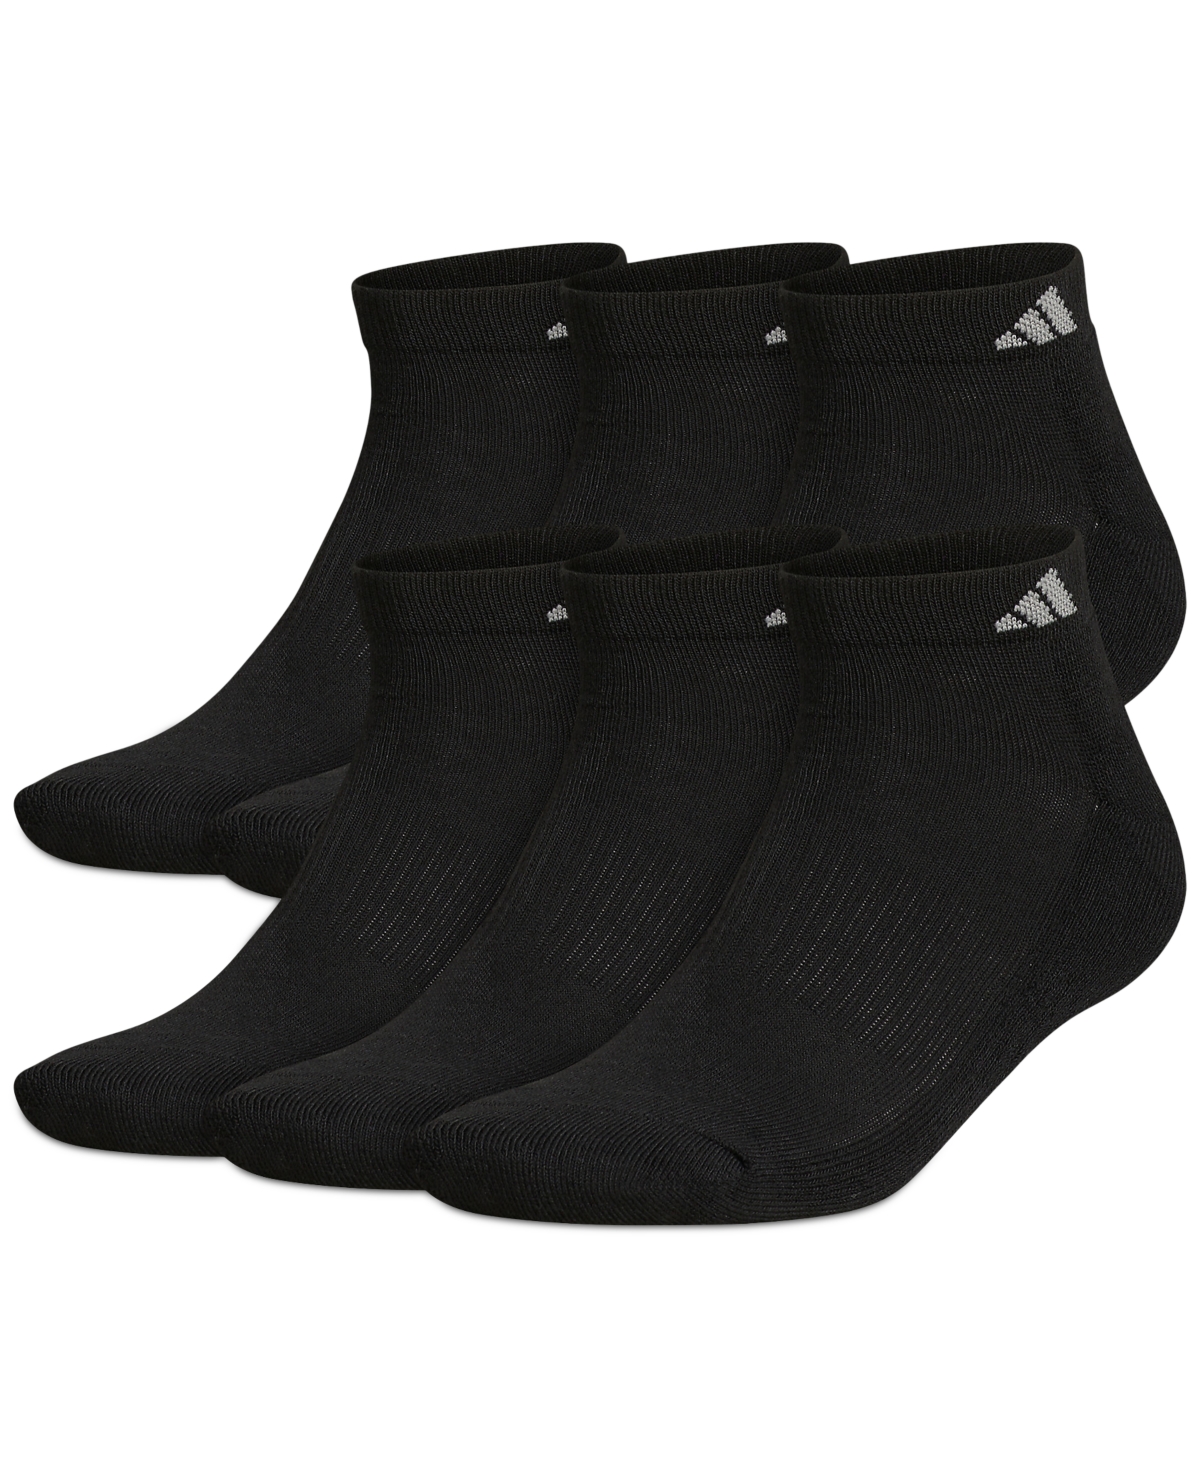 Men's Cushioned Athletic 6-Pack Low Cut Socks - Black